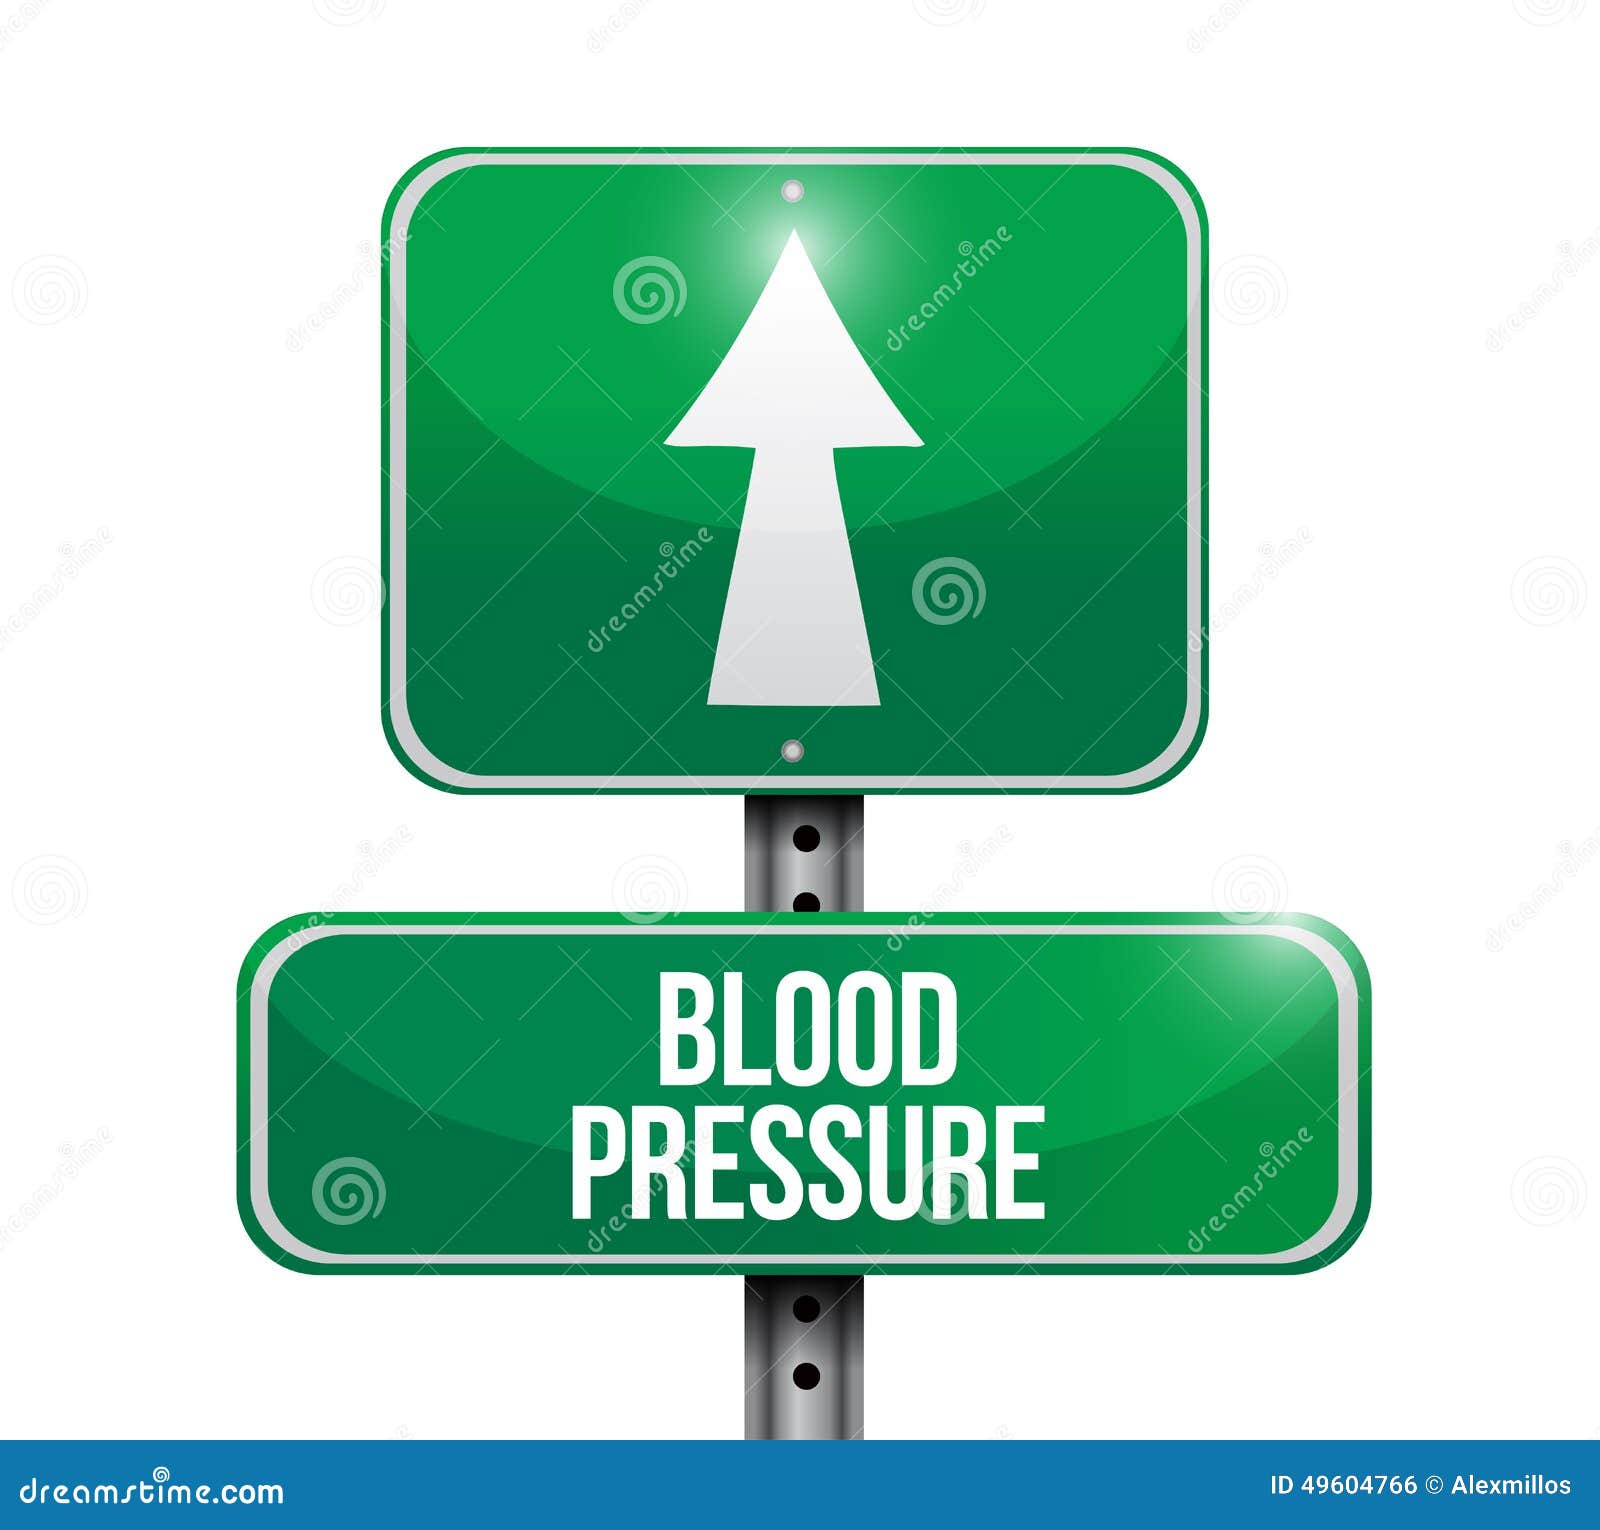 blood pressure chart clipart - photo #44